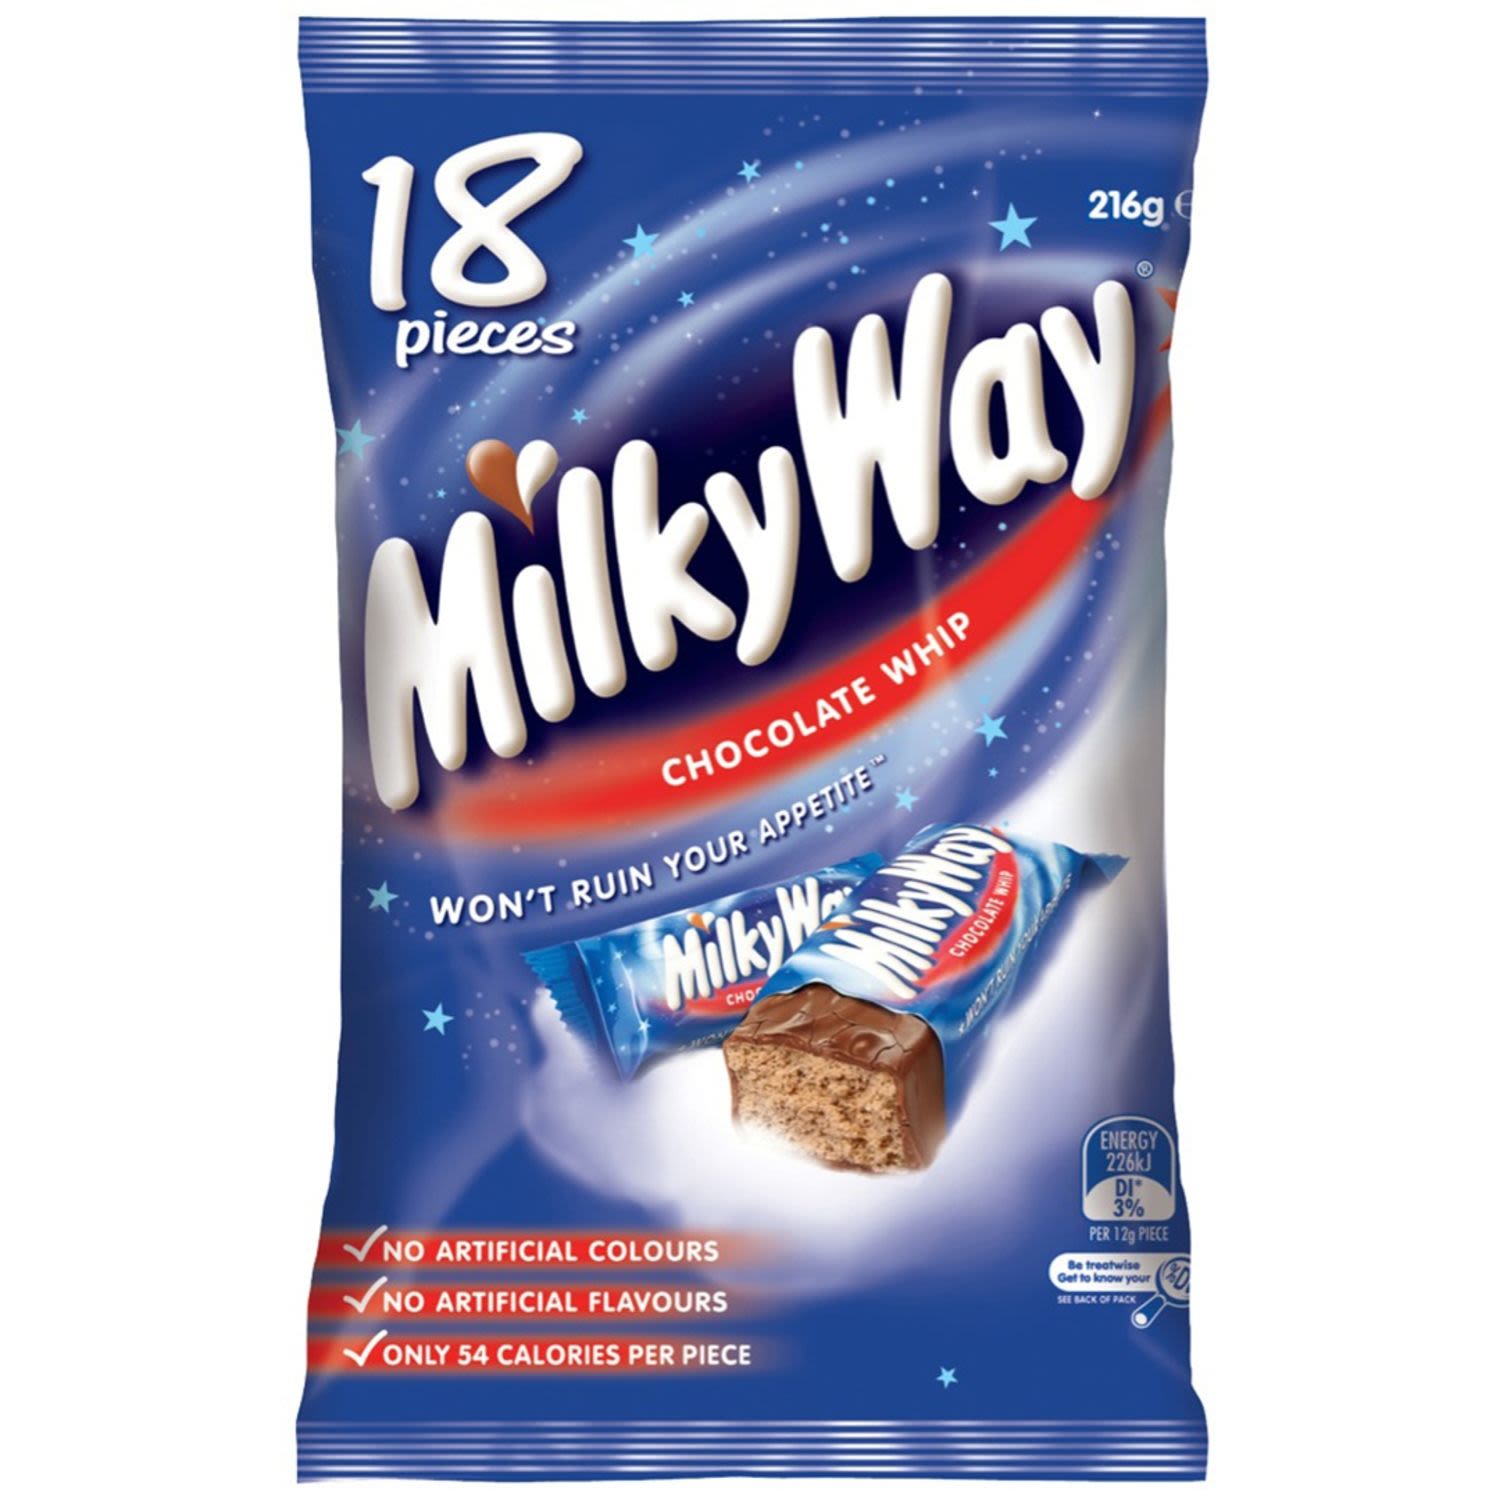 Milky Way Chocolate Medium Party Share Bag, 18 Each